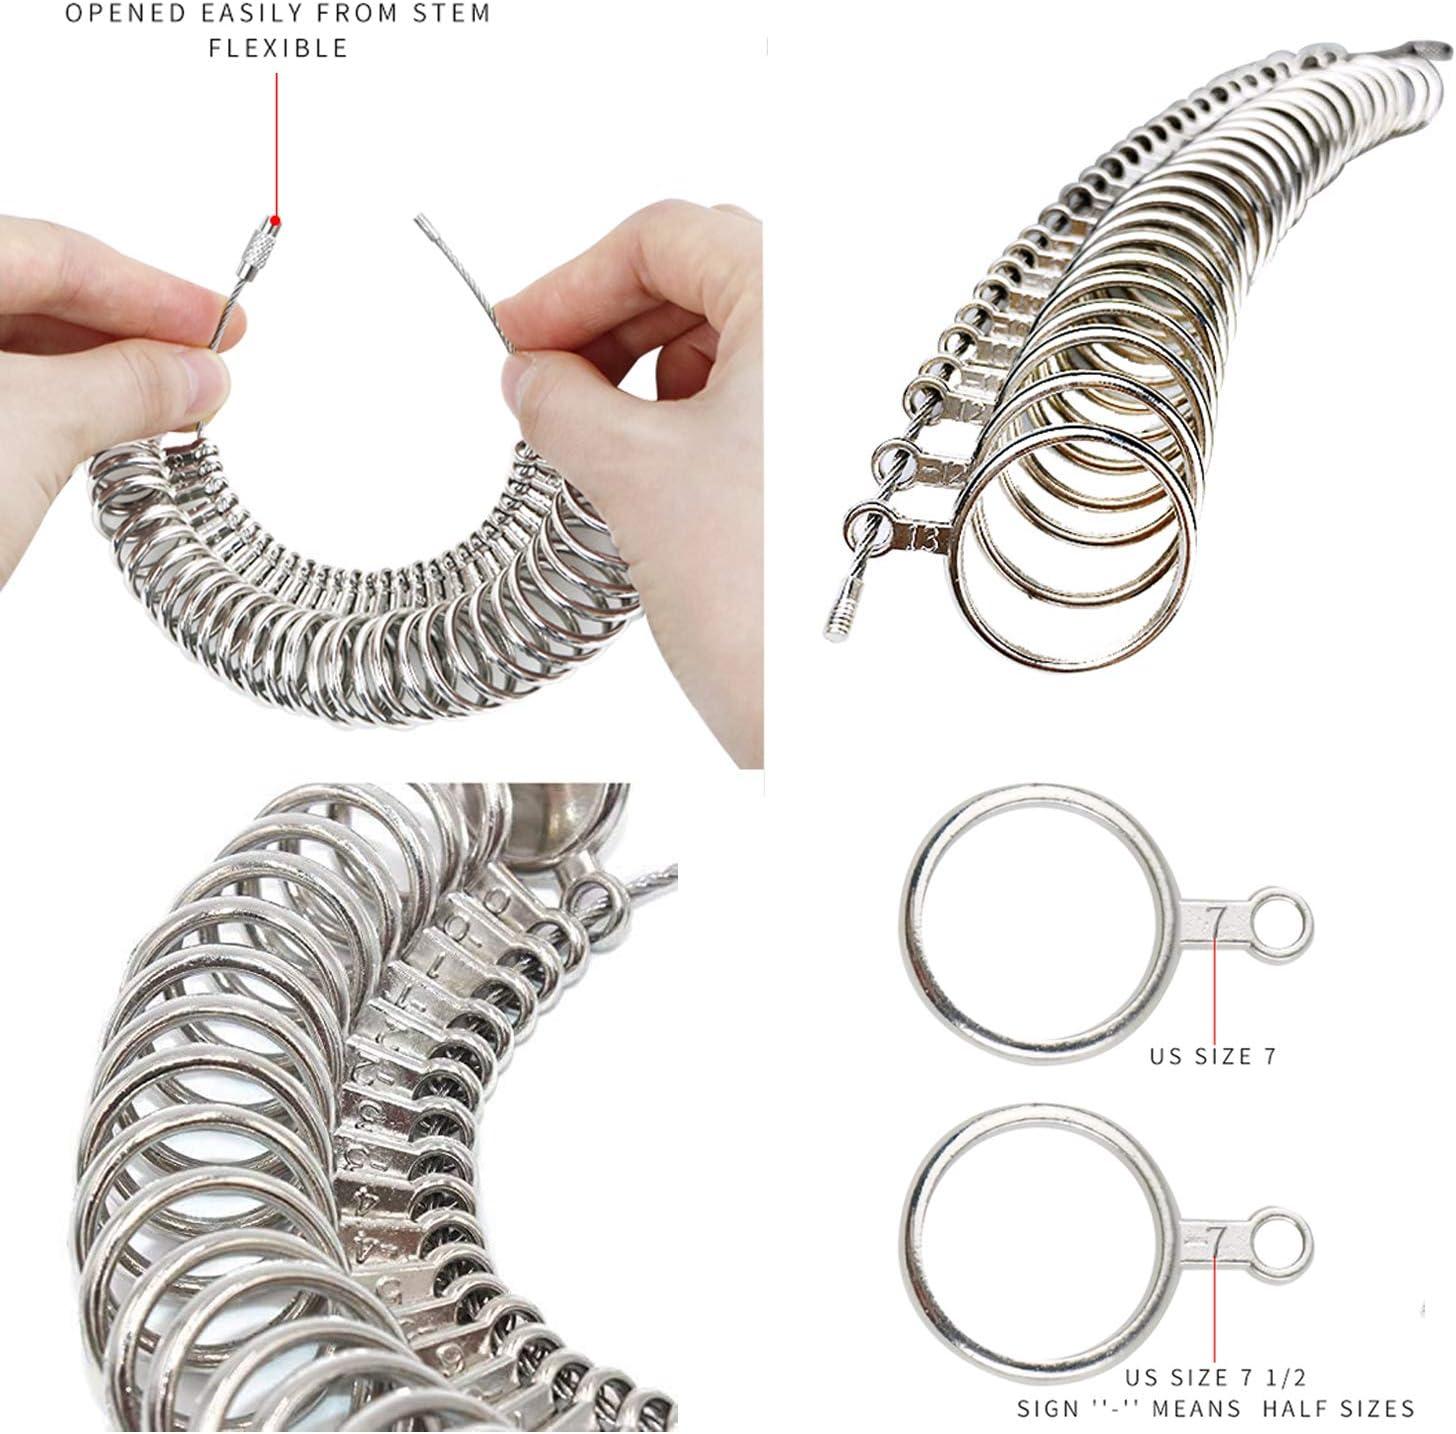 NIUPIKA Ring Sizer Measuring Tool Measure Finger Rings Sizing Set Metal Ring  Mandrel Gauge US Size 1-13 Jewelry Tools Sizers Kit of 27 Pieces